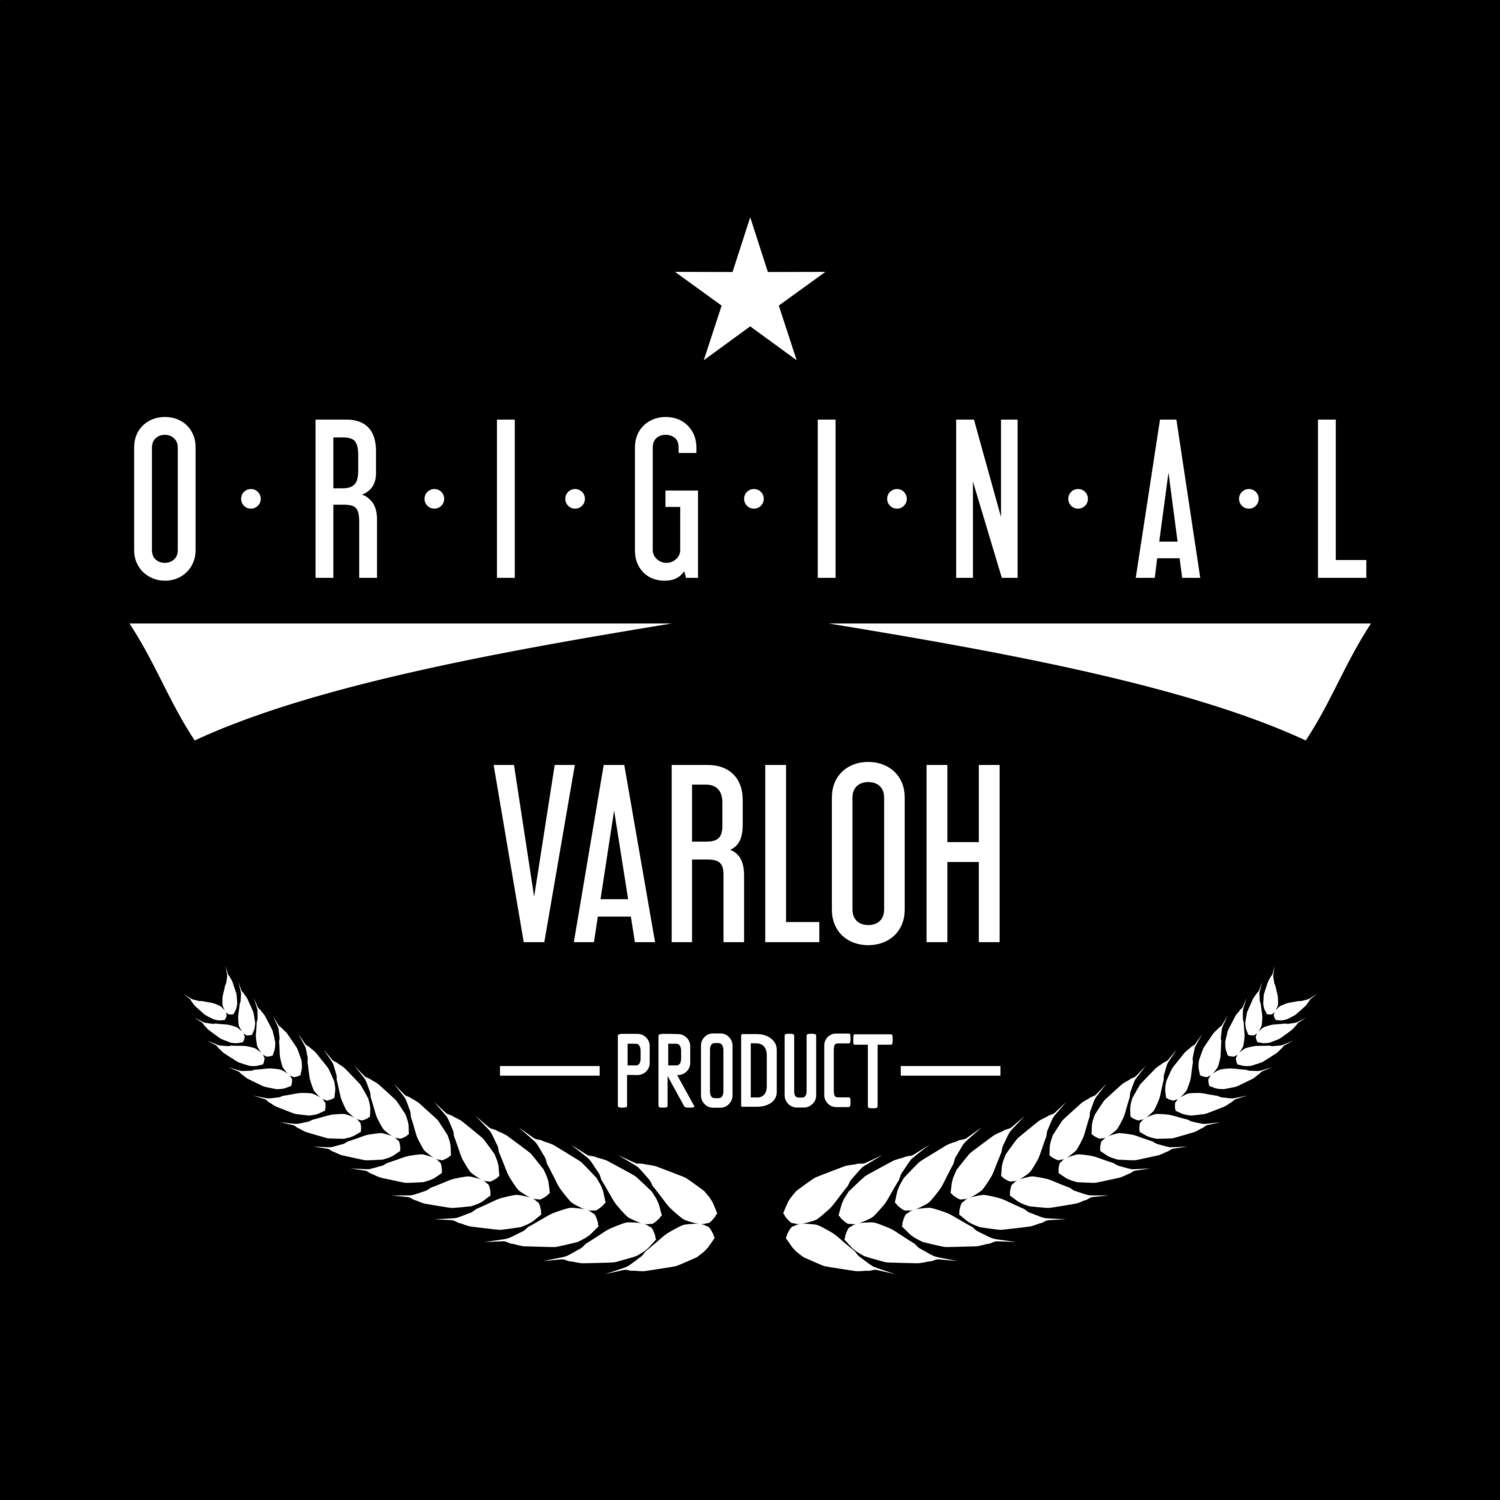 Varloh T-Shirt »Original Product«